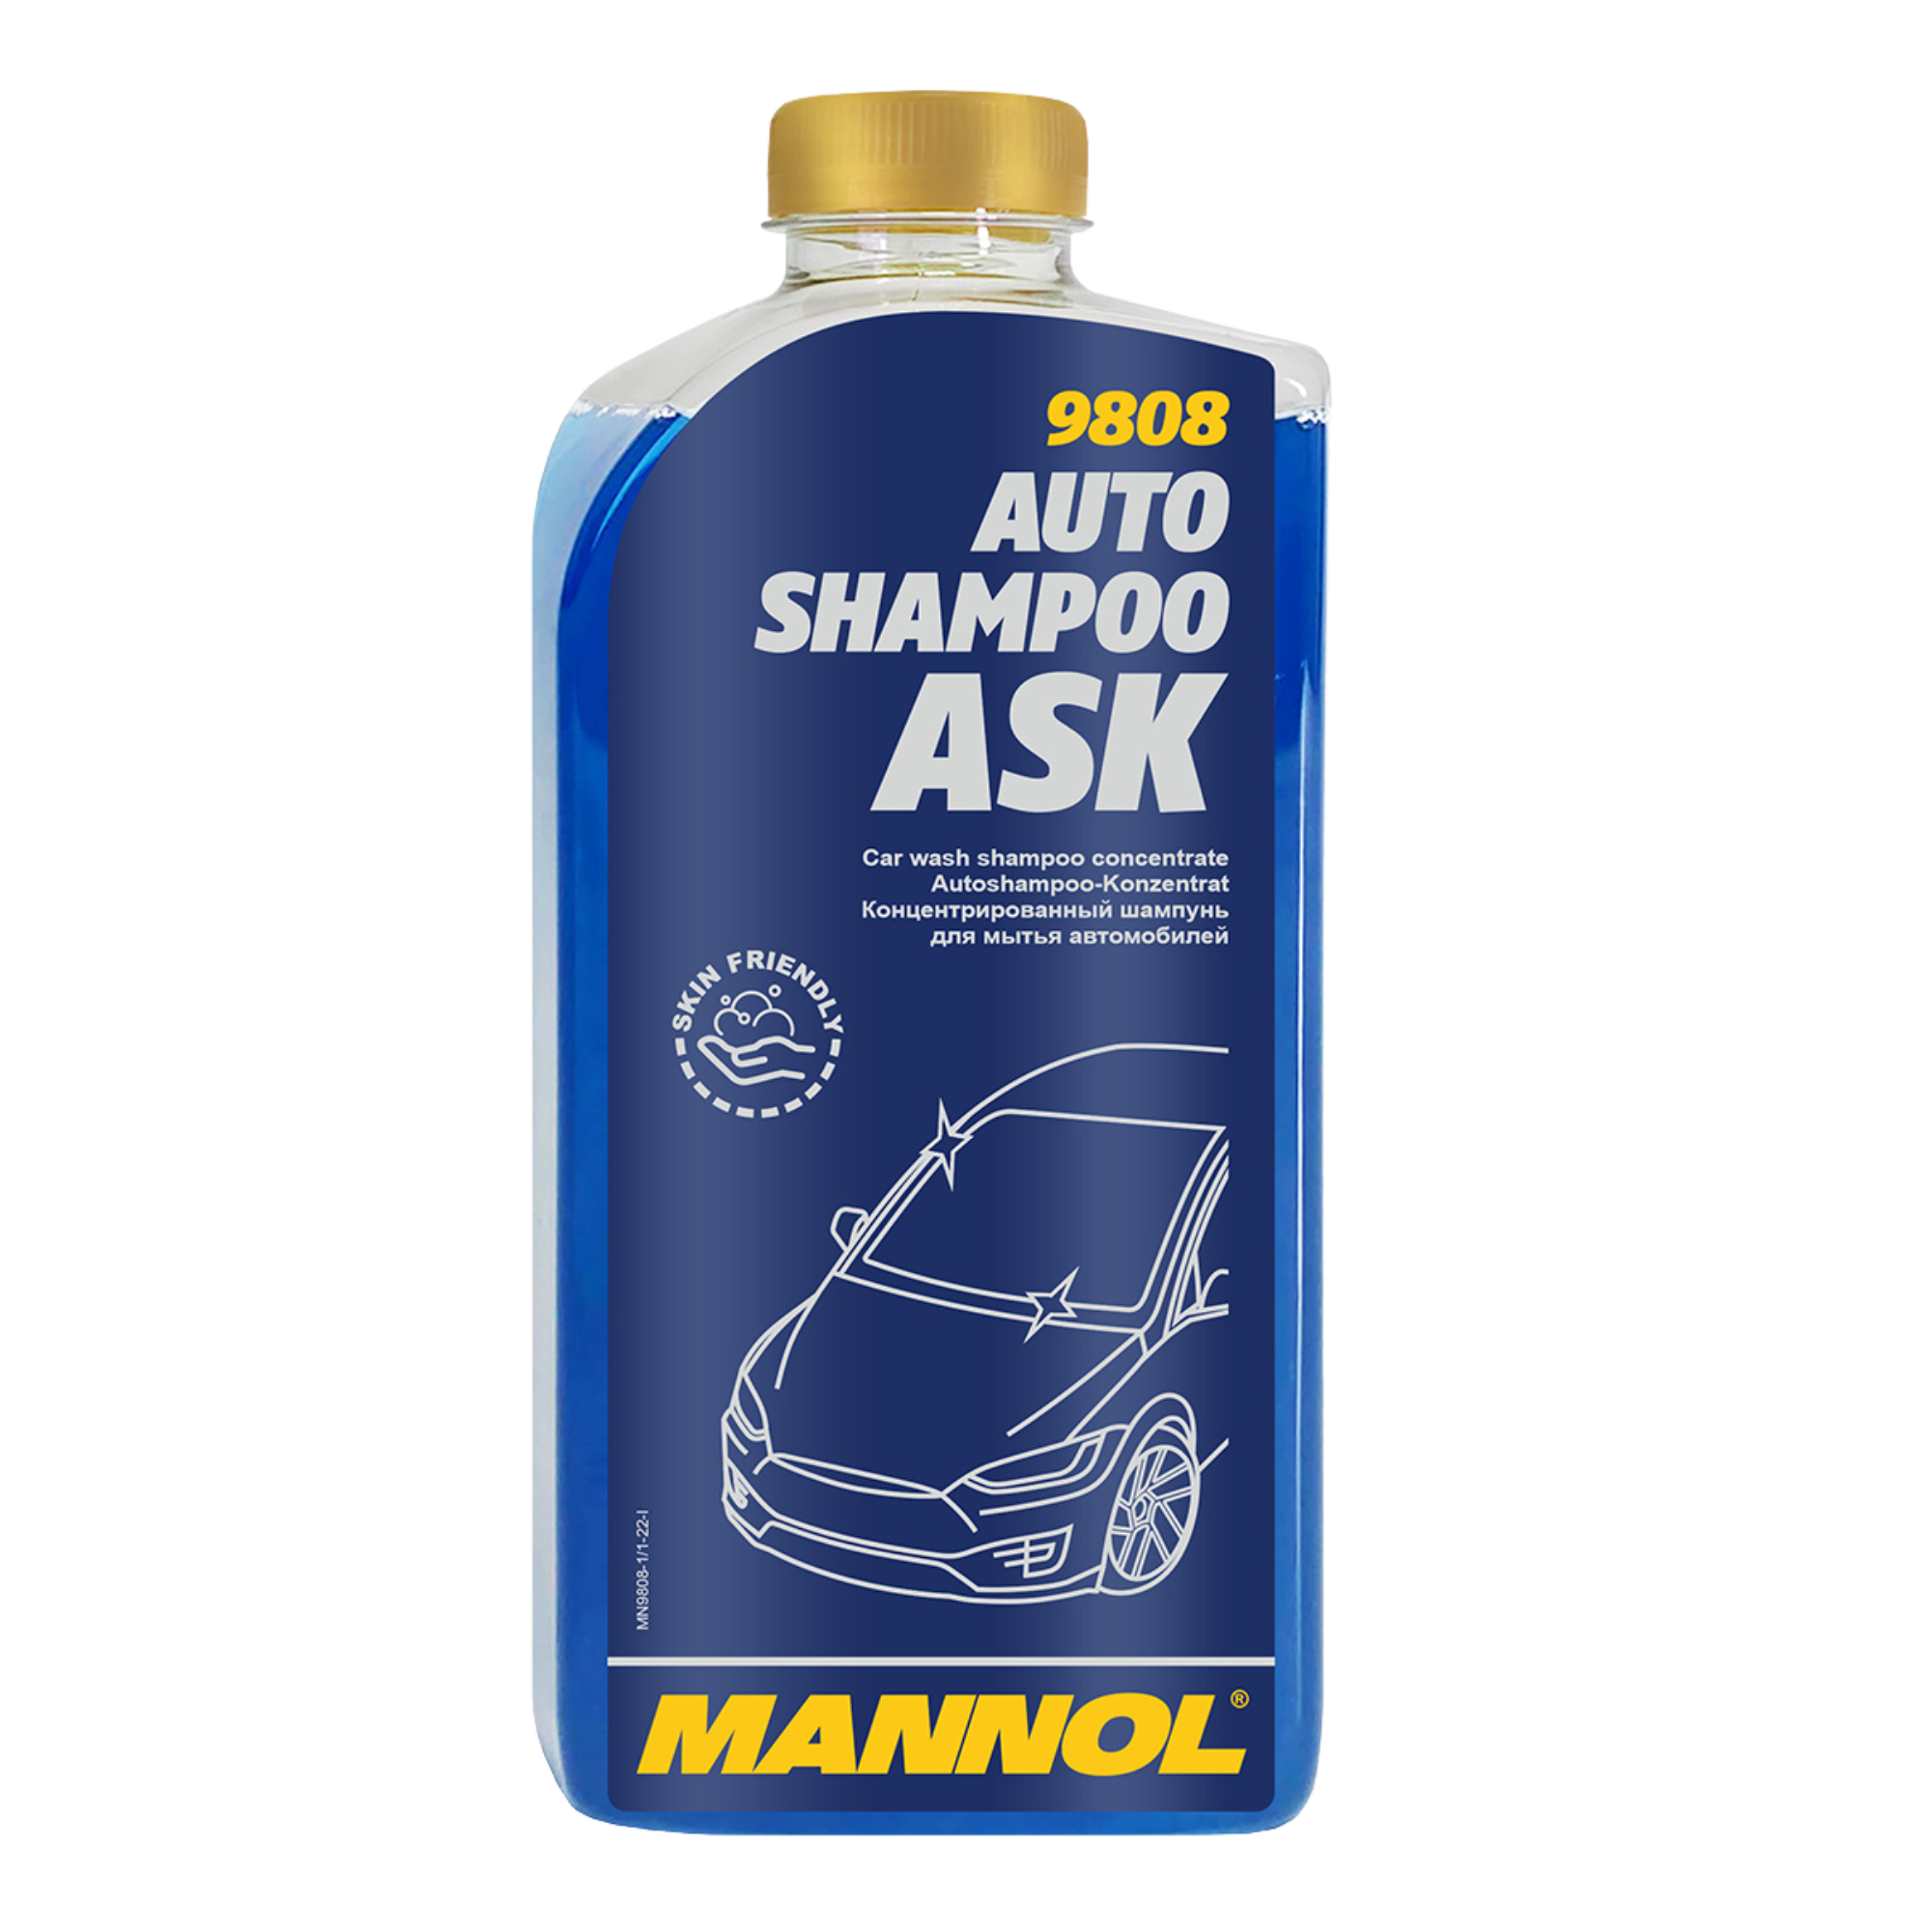 Autósampon MANNOL Auto Shampoo ASK 9808